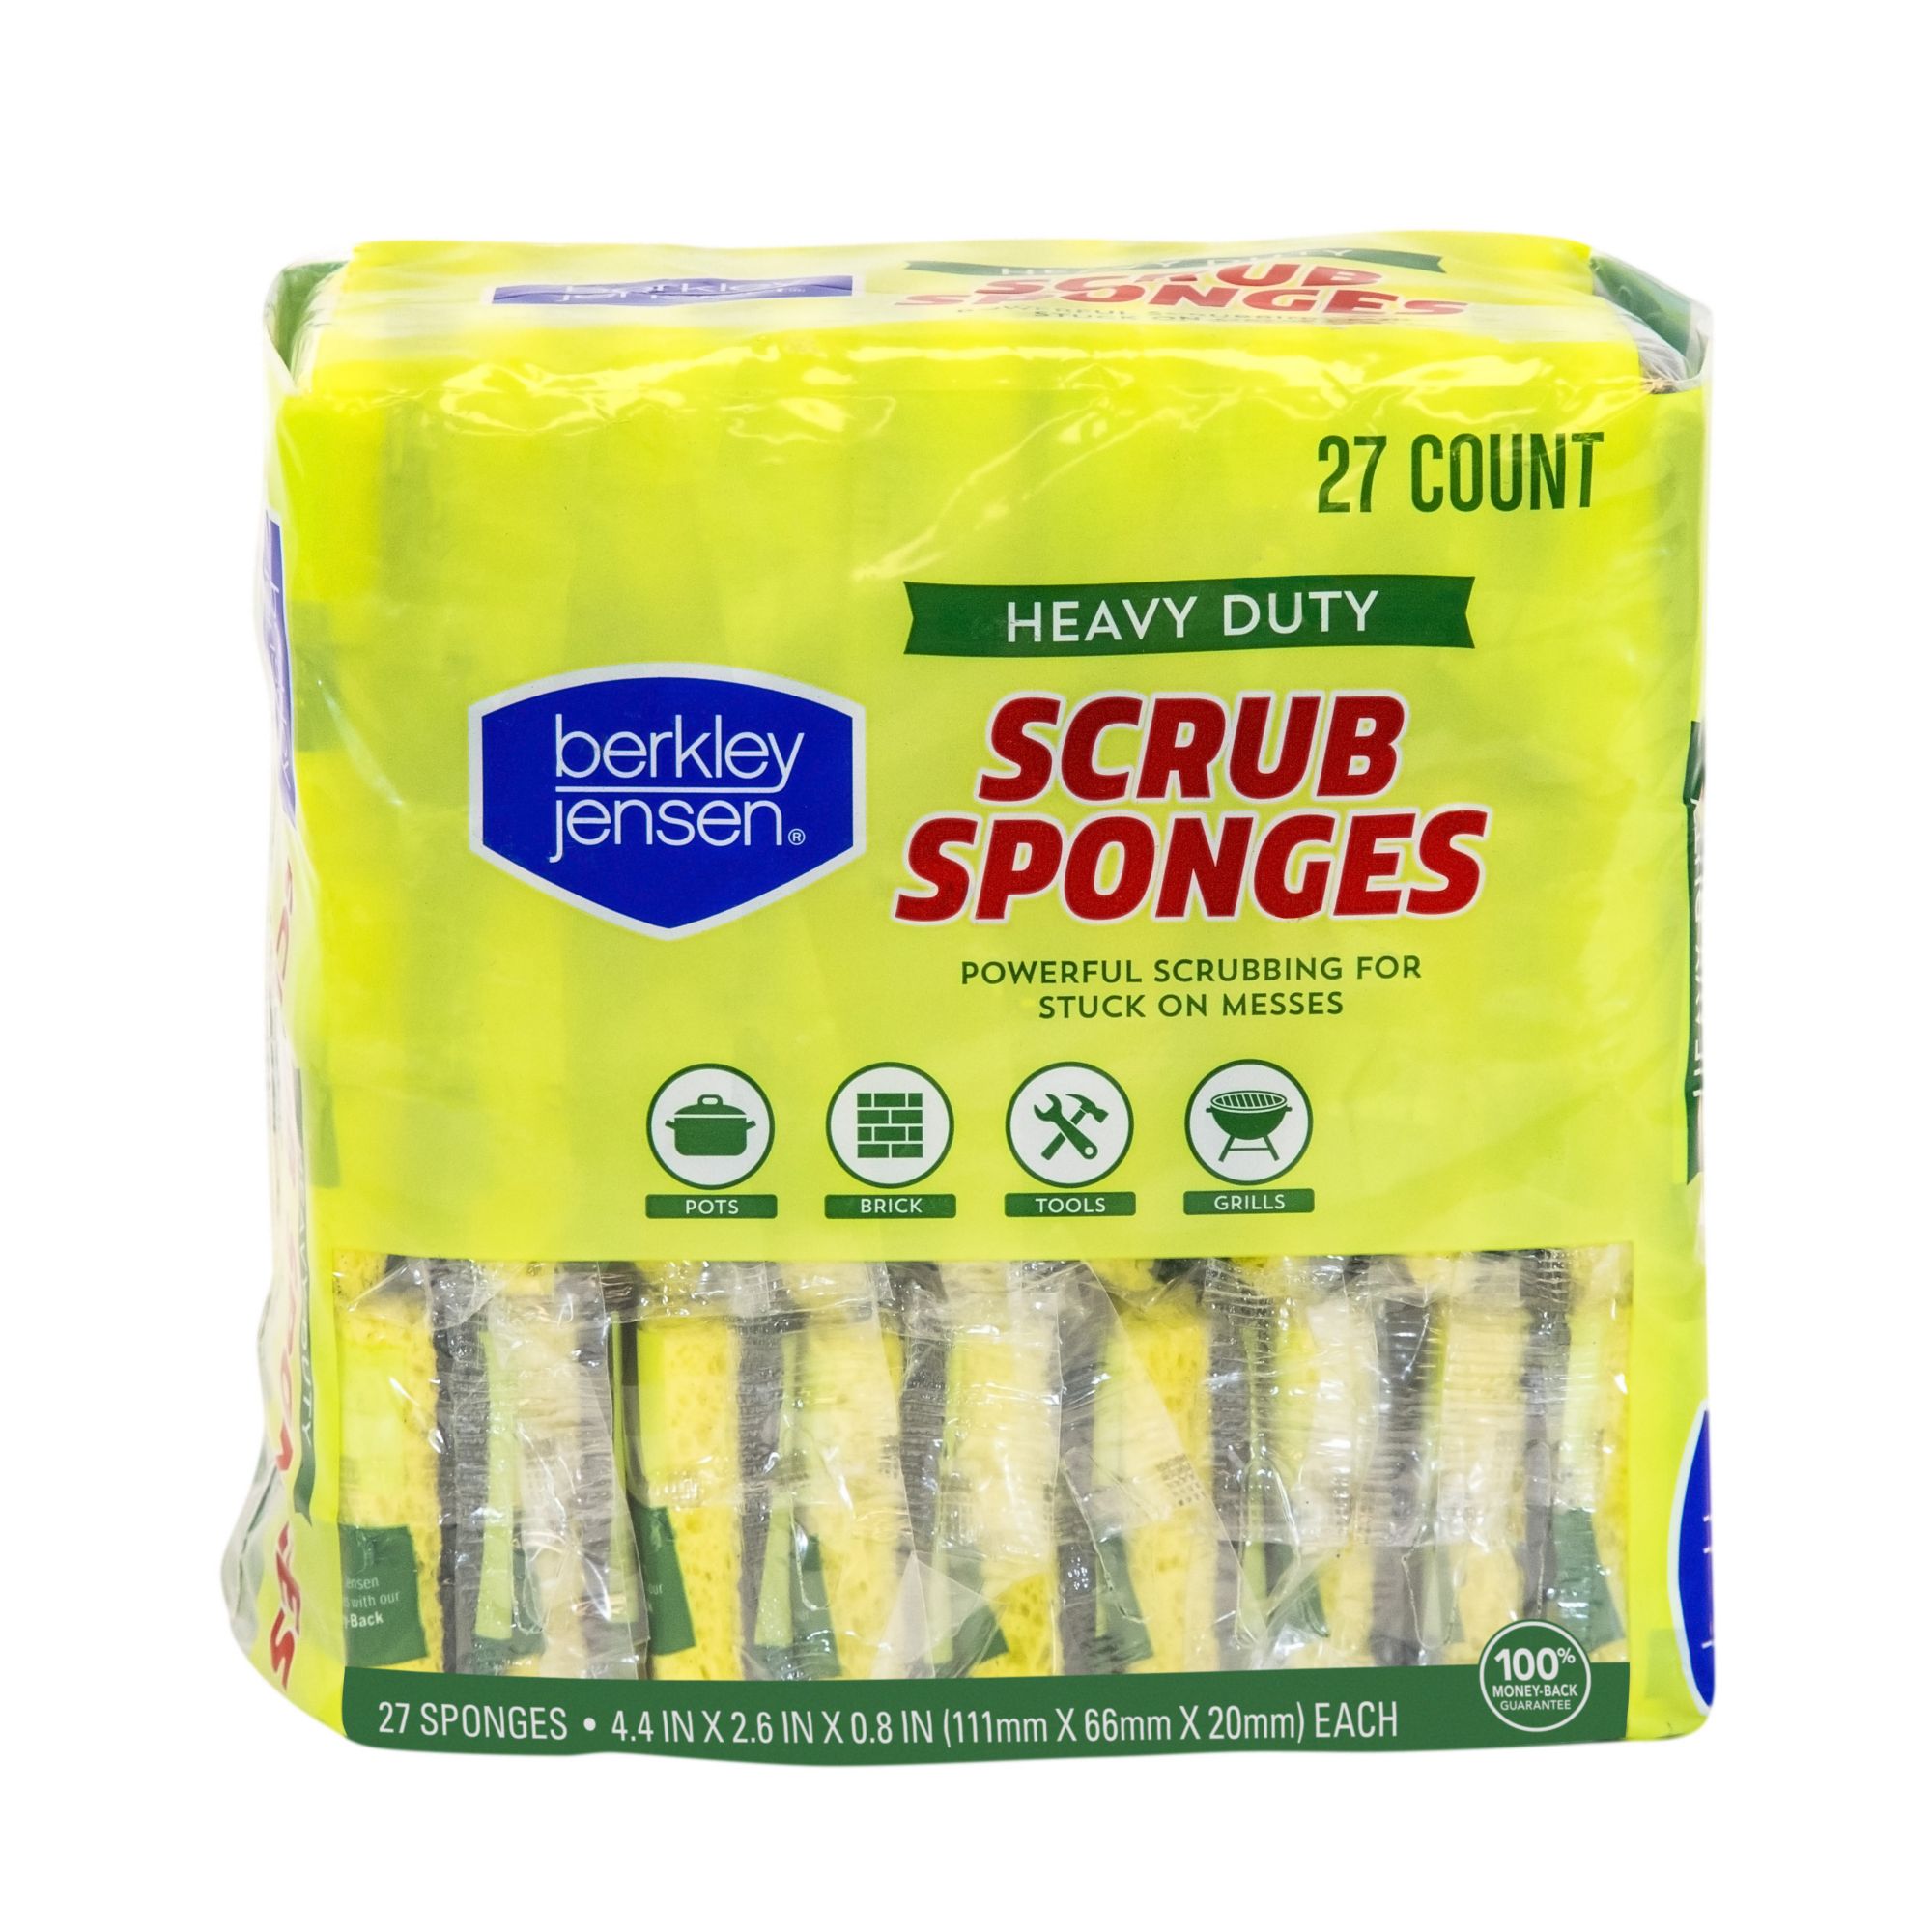 Berkley Jensen Heavy Duty Cellulose Scrub Sponges, 27 ct.